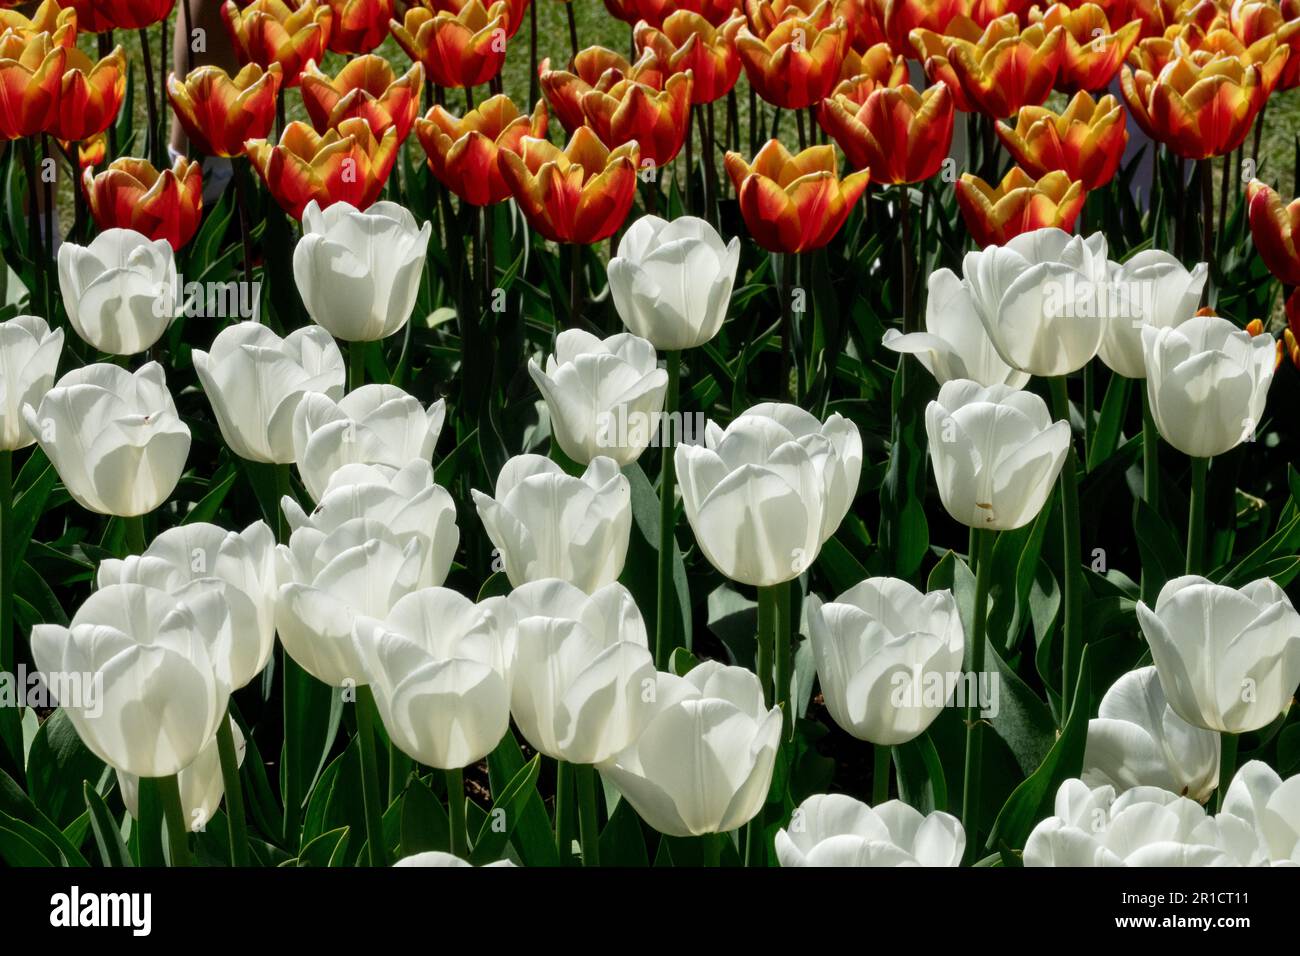 White Tulip 'Royal Virgin', Flower bed, Display, Beautiful, Tulips, Garden, Flowers, Mixed Stock Photo